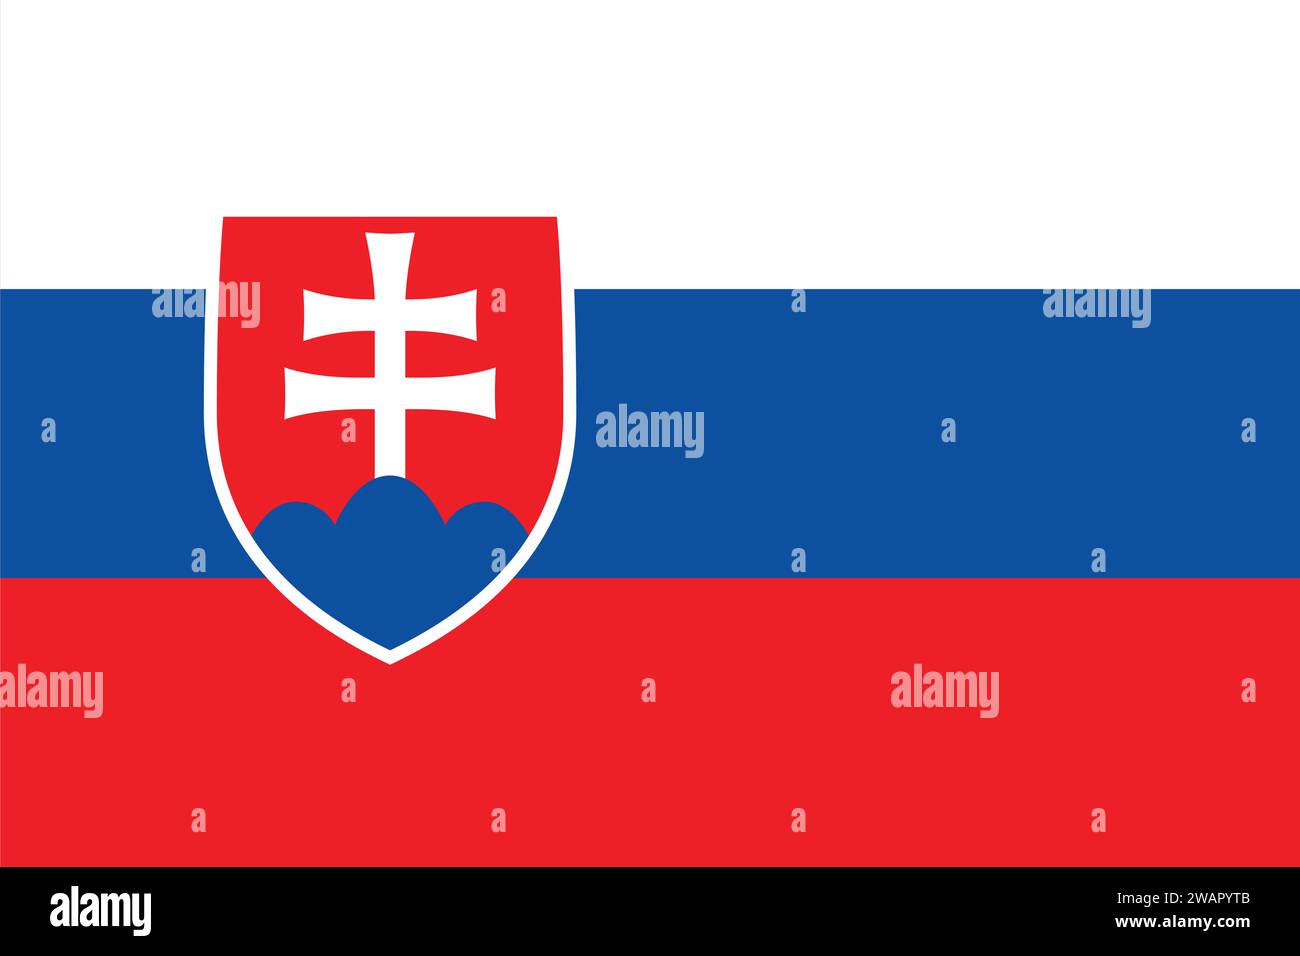 Hochdetaillierte Flagge der Slowakei. Nationale slowakische Flagge. Europa. 3D-Abbildung. Stock Vektor